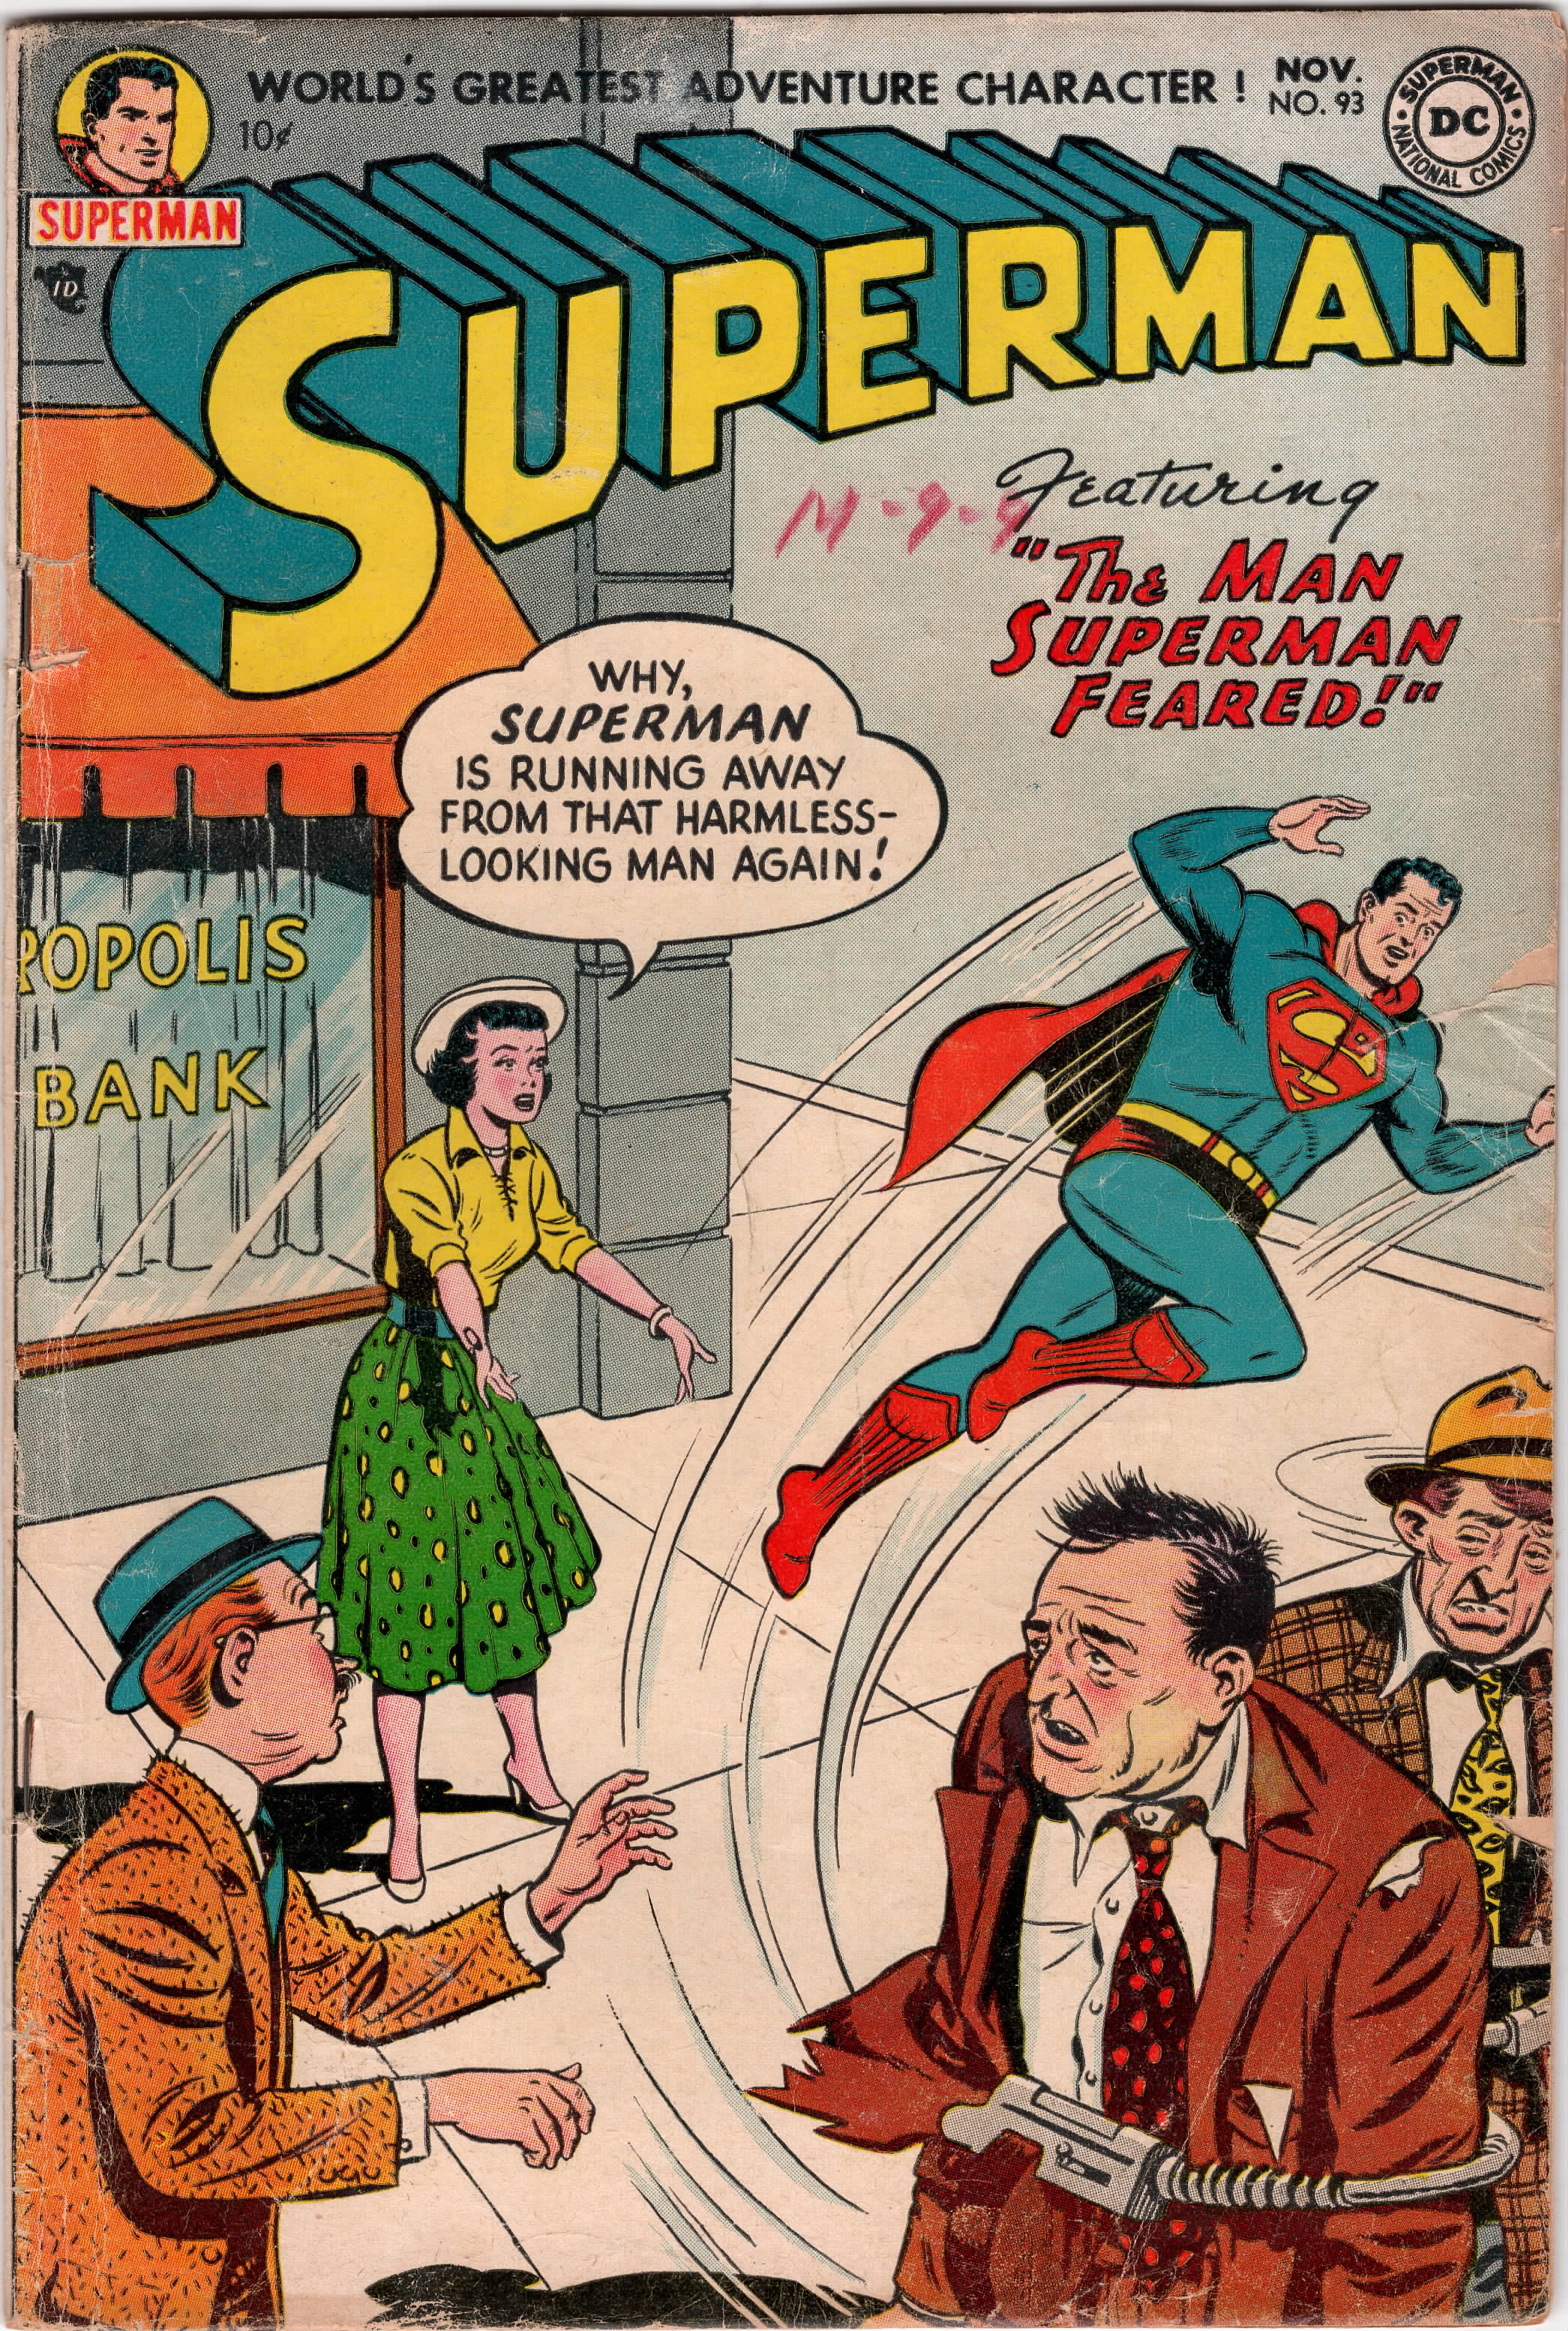 Superman #093